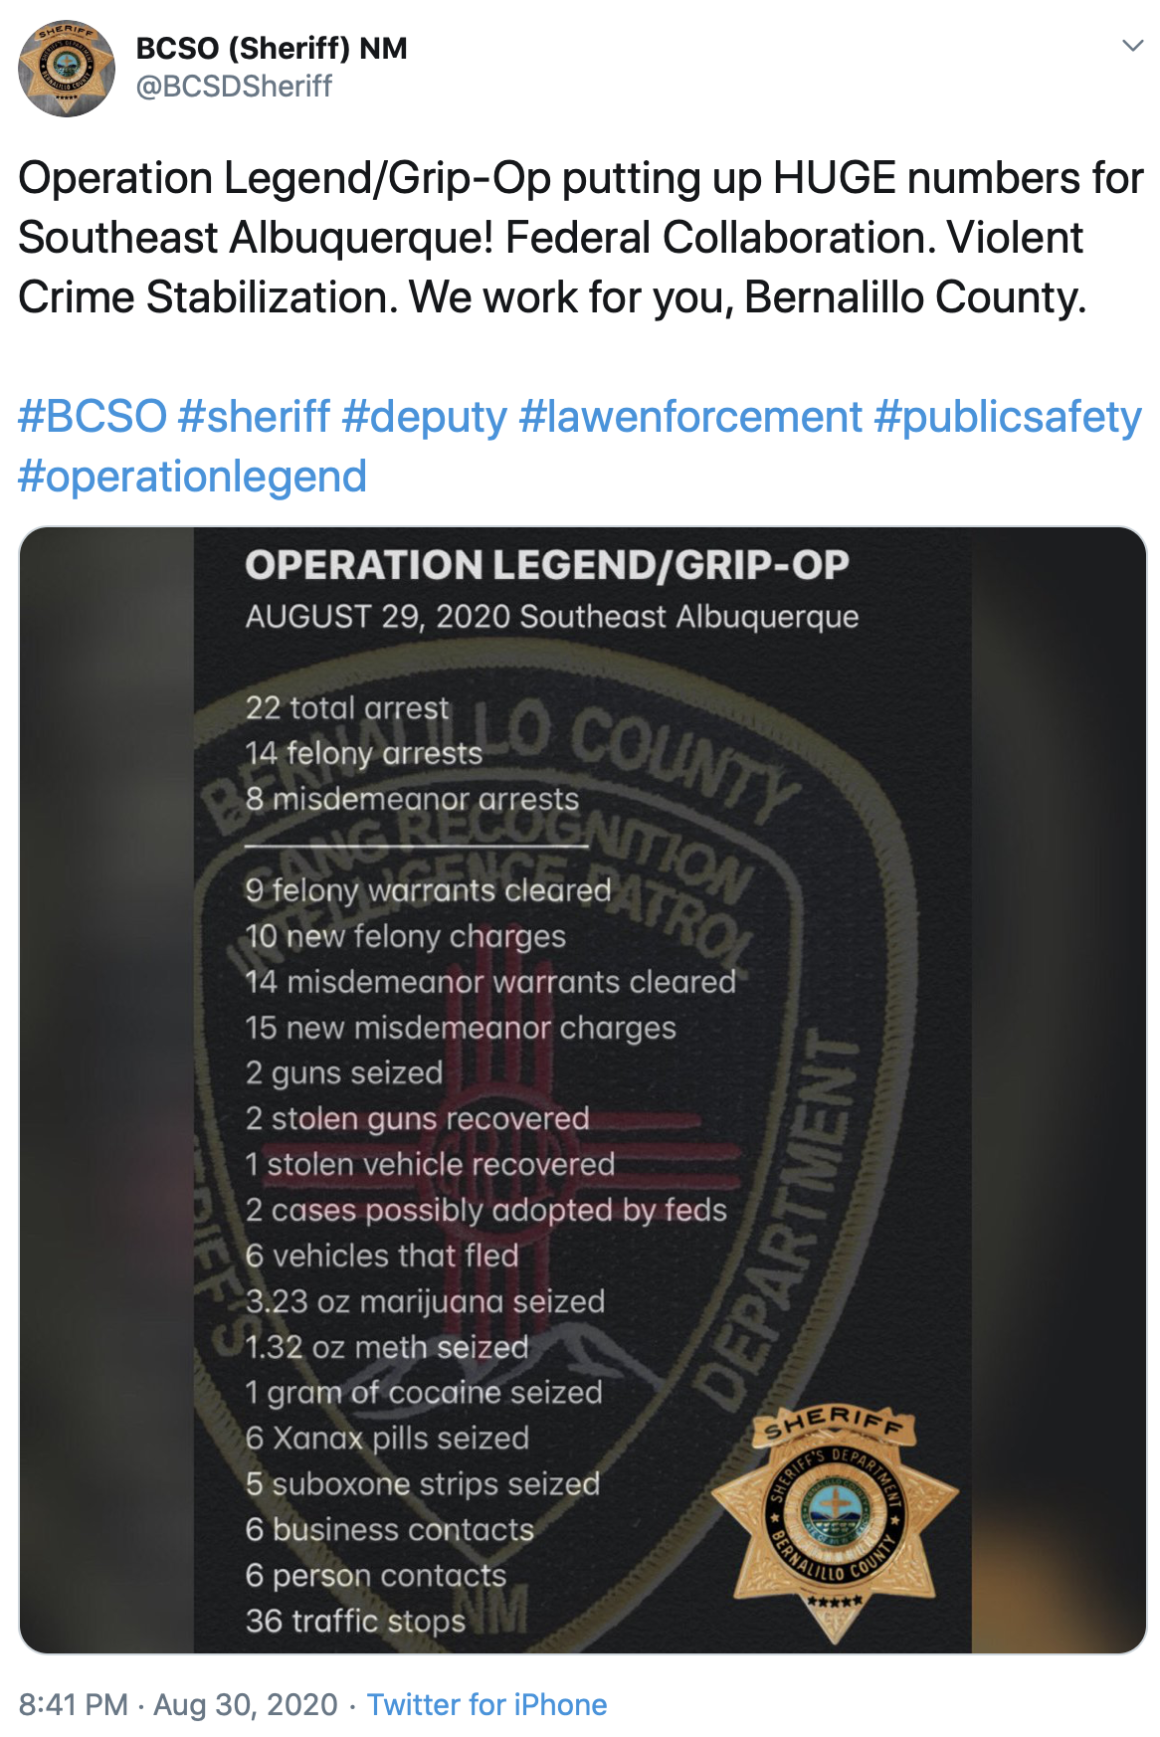 Operation Legend Tweet from BCSO